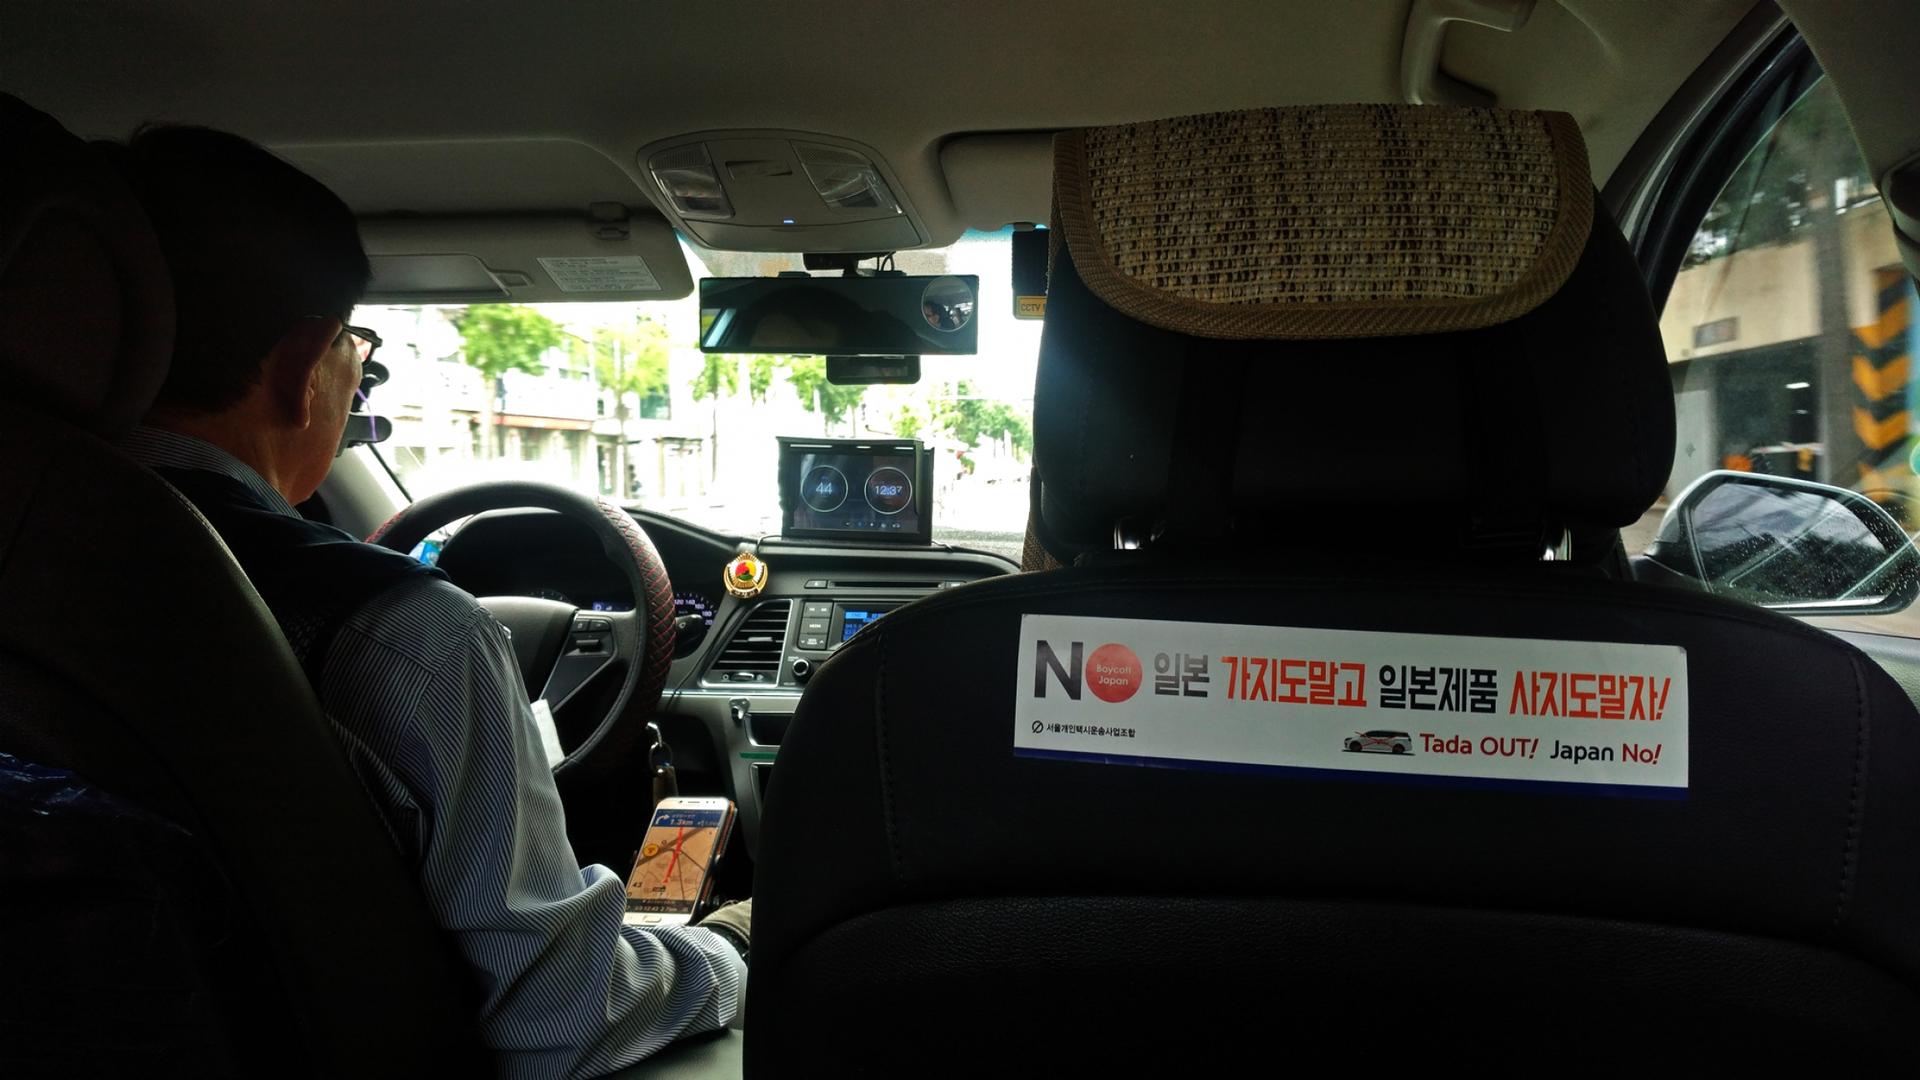 A taxi interior features an anti-Japan sticker